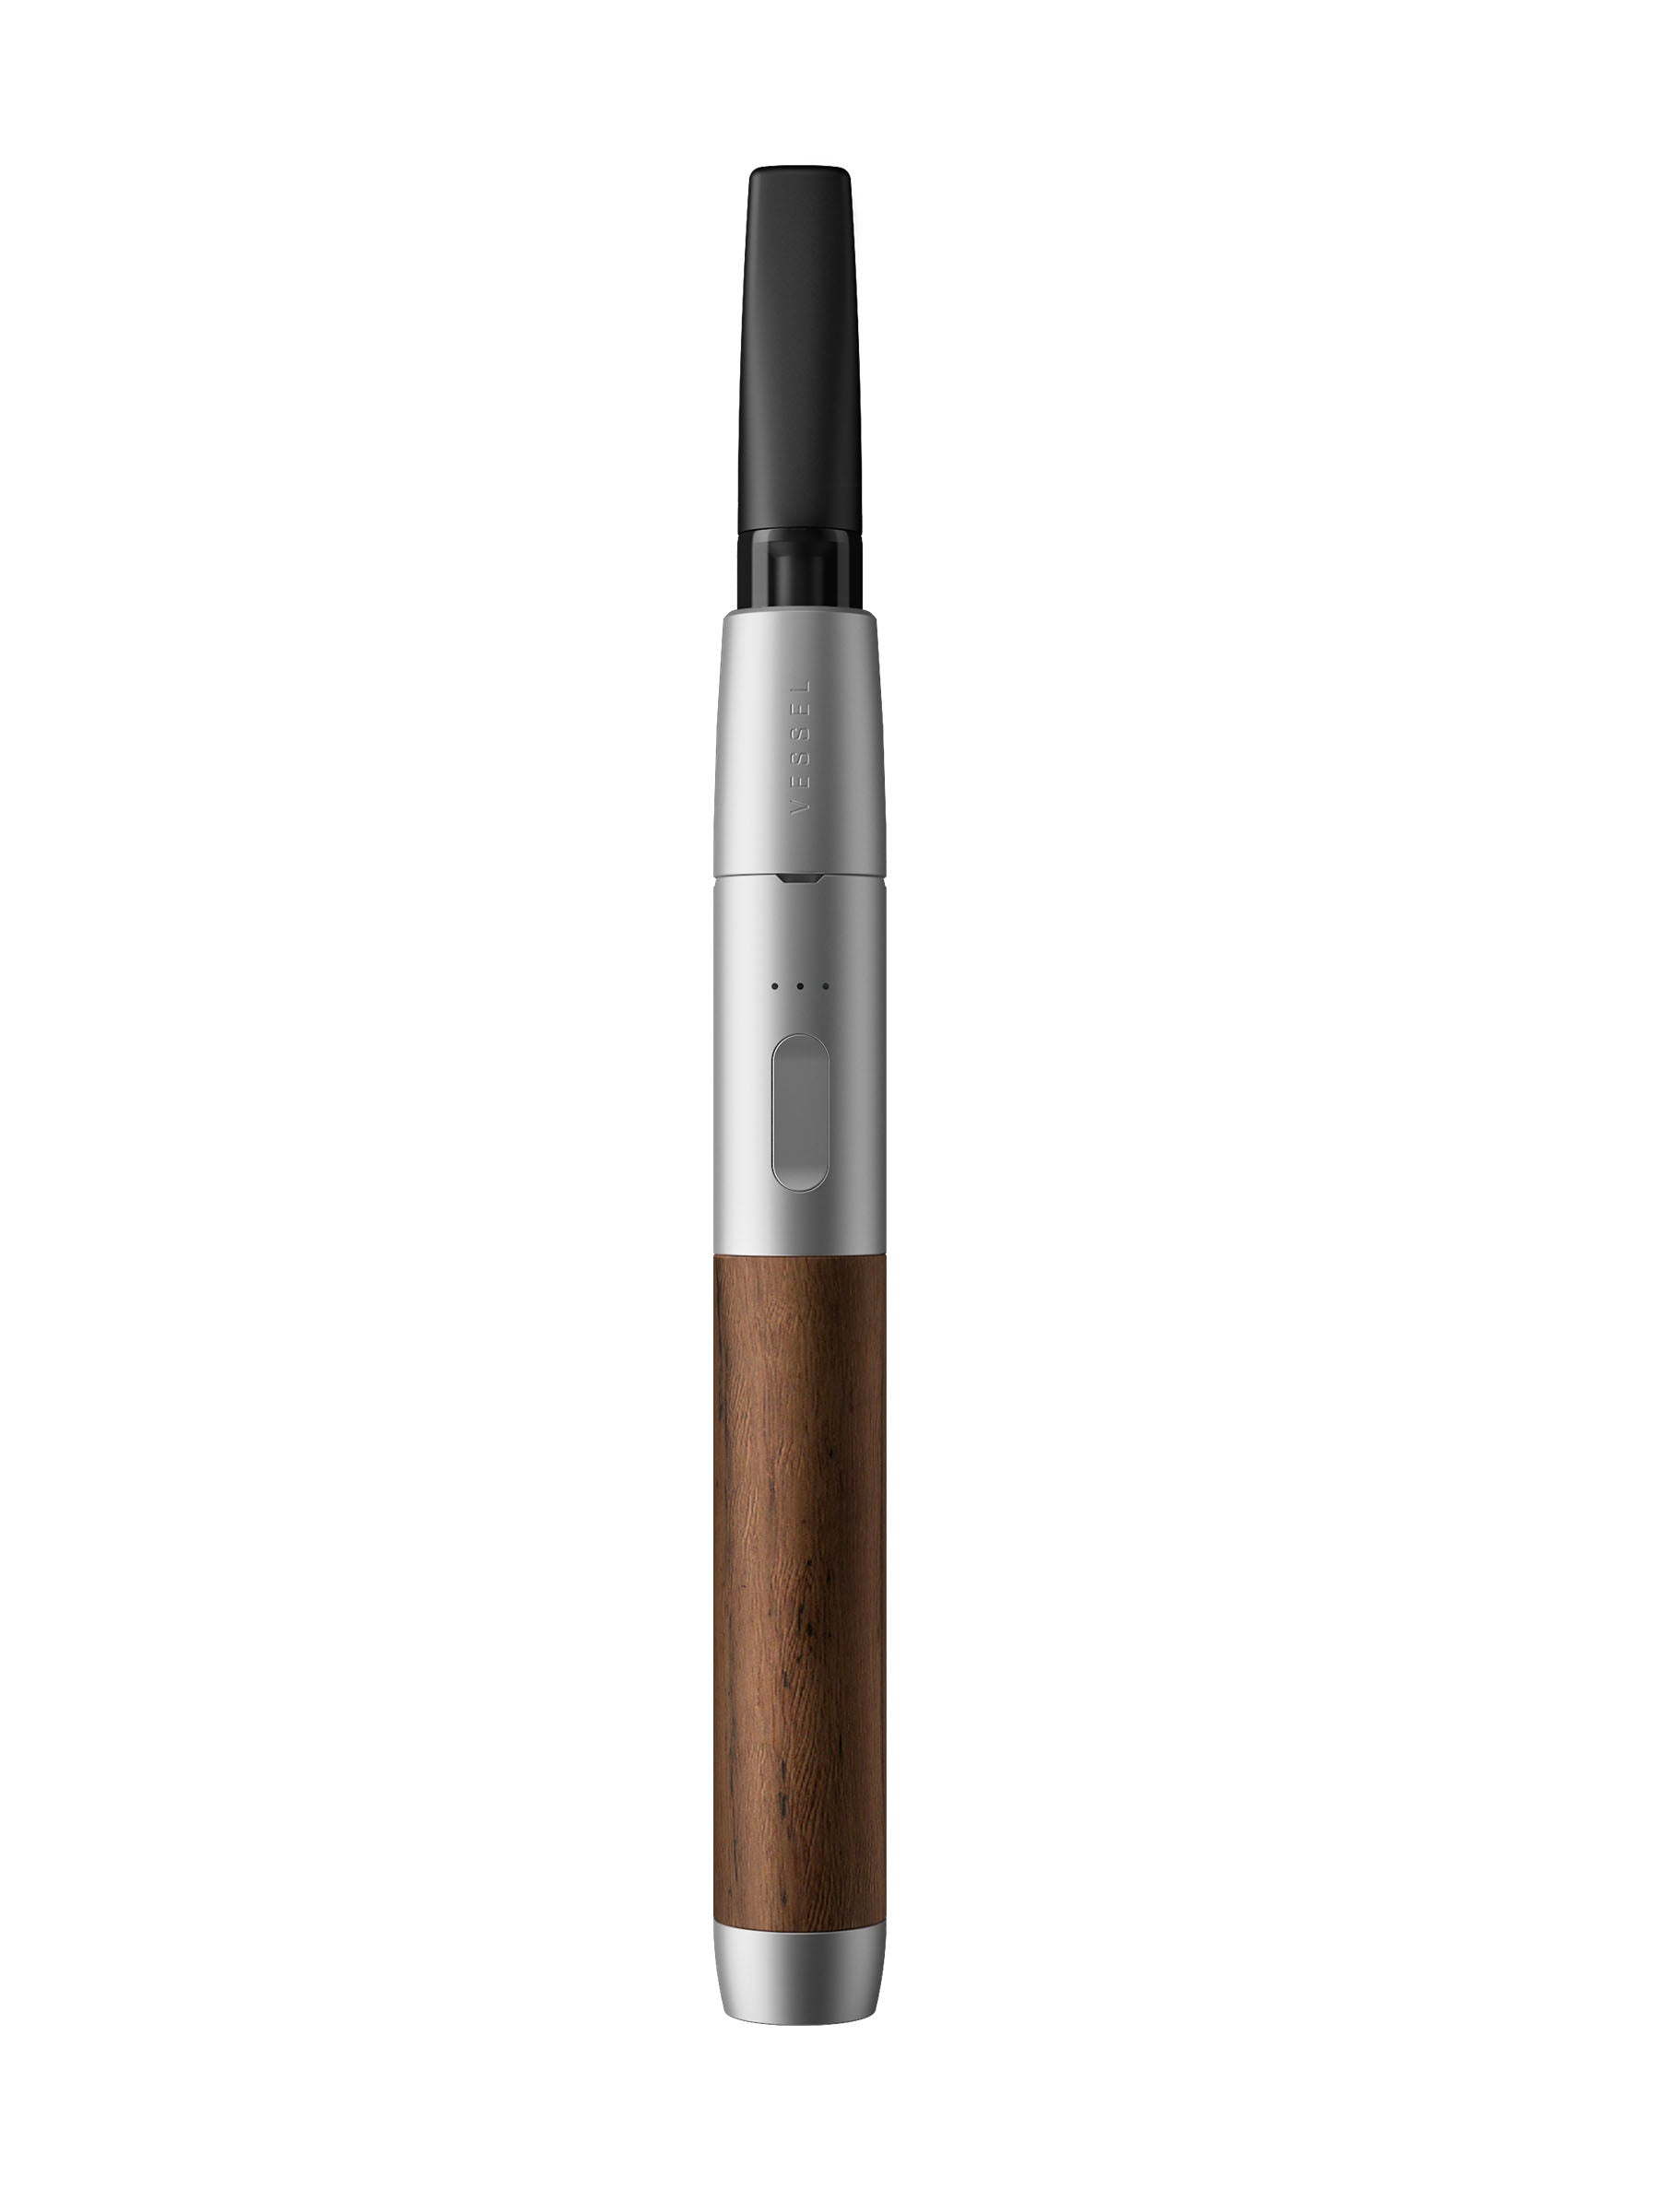 Vessel Wood Series Vape Pen